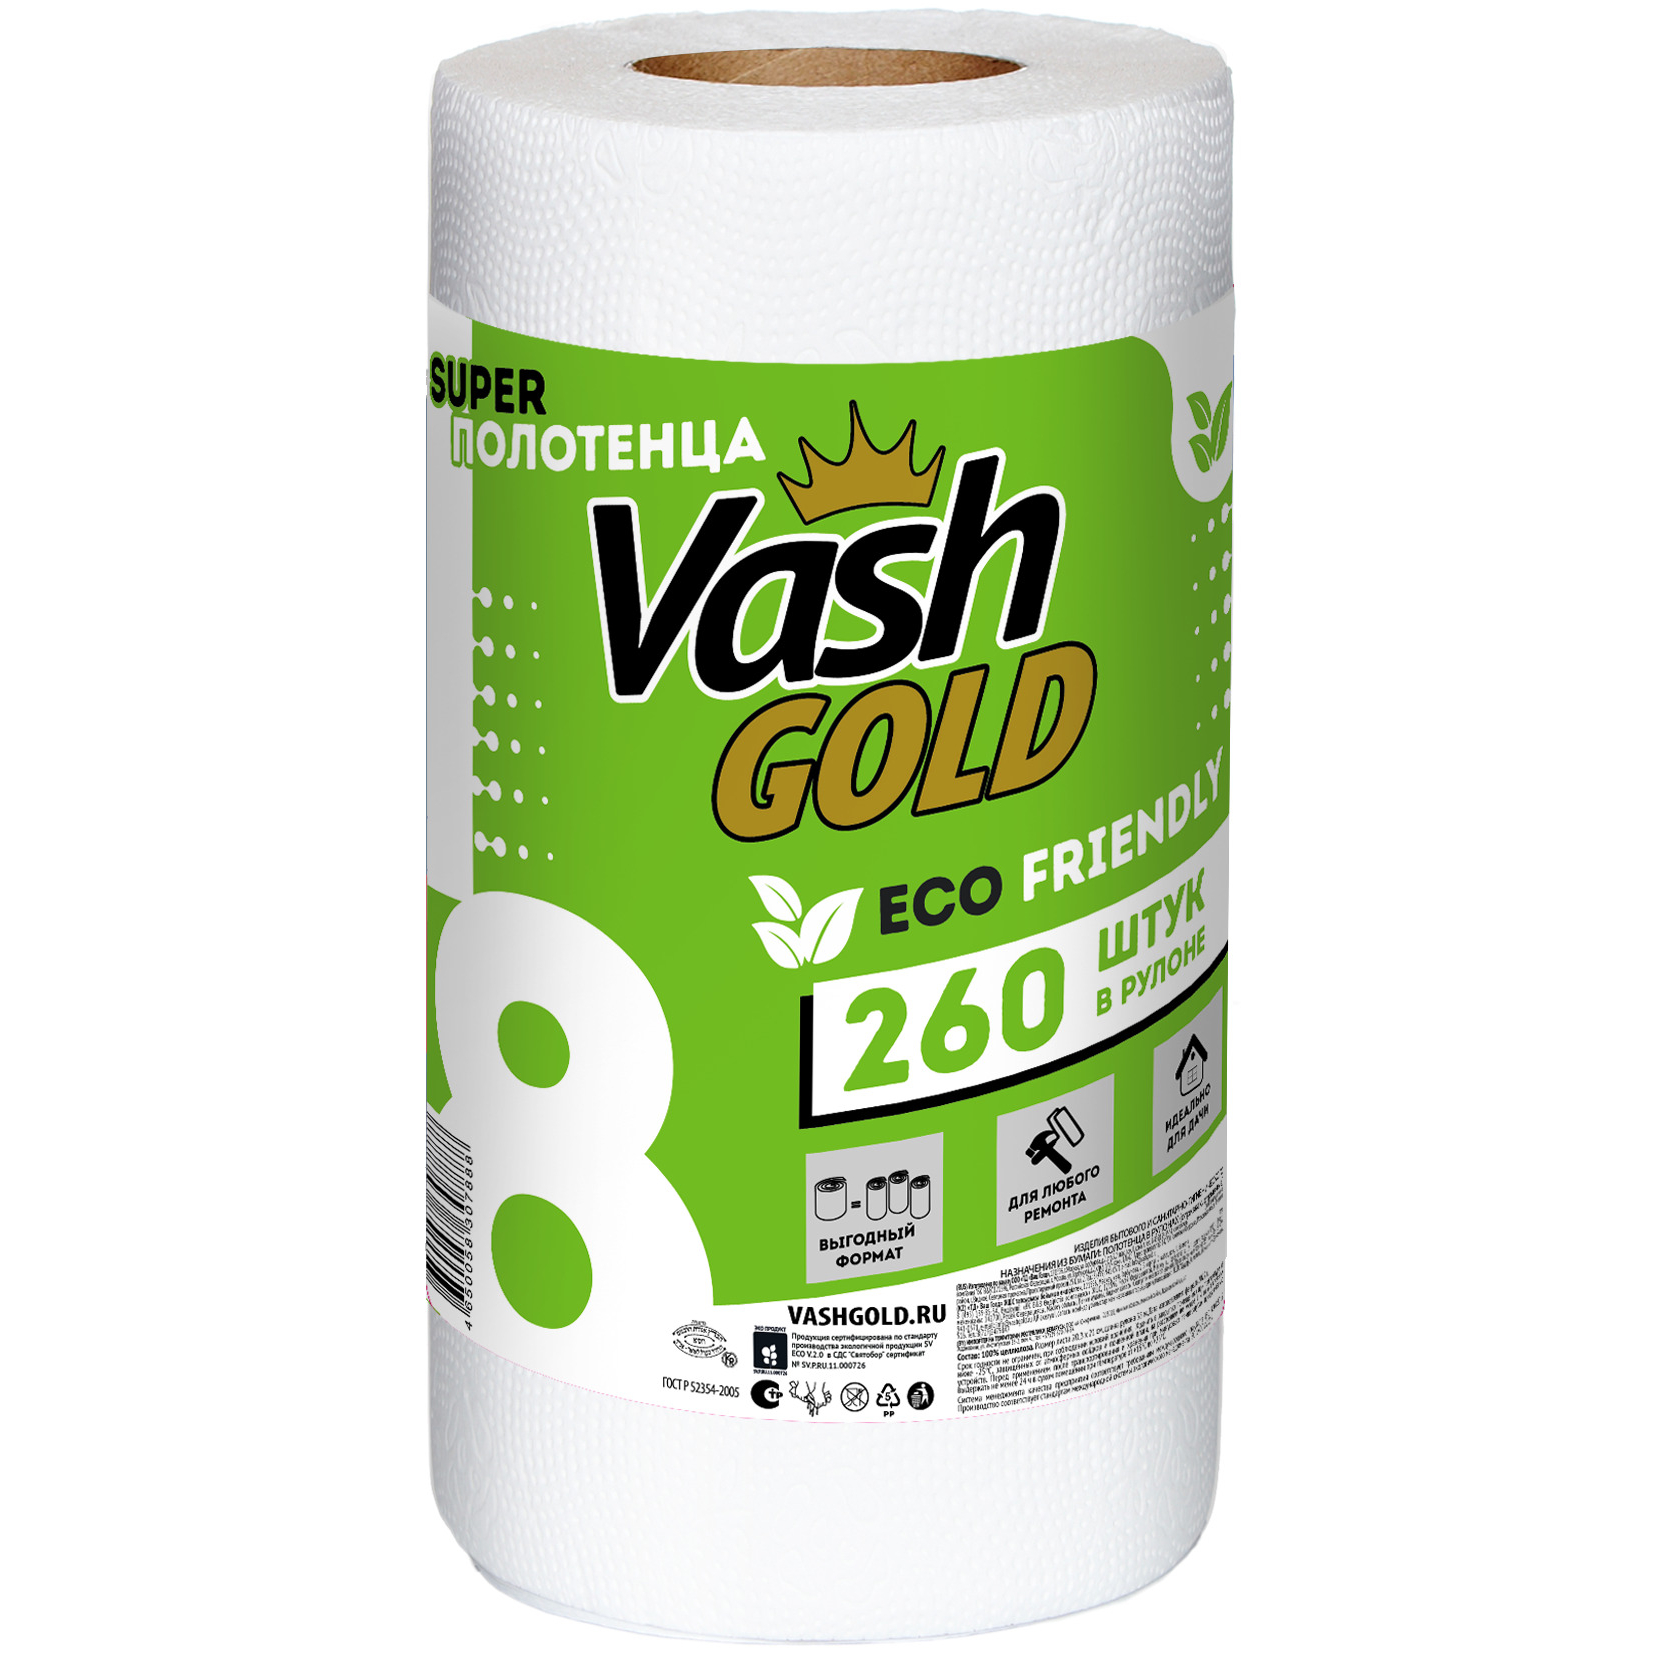 Vash gold super. Vash Gold Eco friendly бумажные полотенца super 260 л/рул. Бумажное полотенце Eco (401)Elma. Бумажные полотенца big-Roll. Бумажные полотенца Eco friendly.